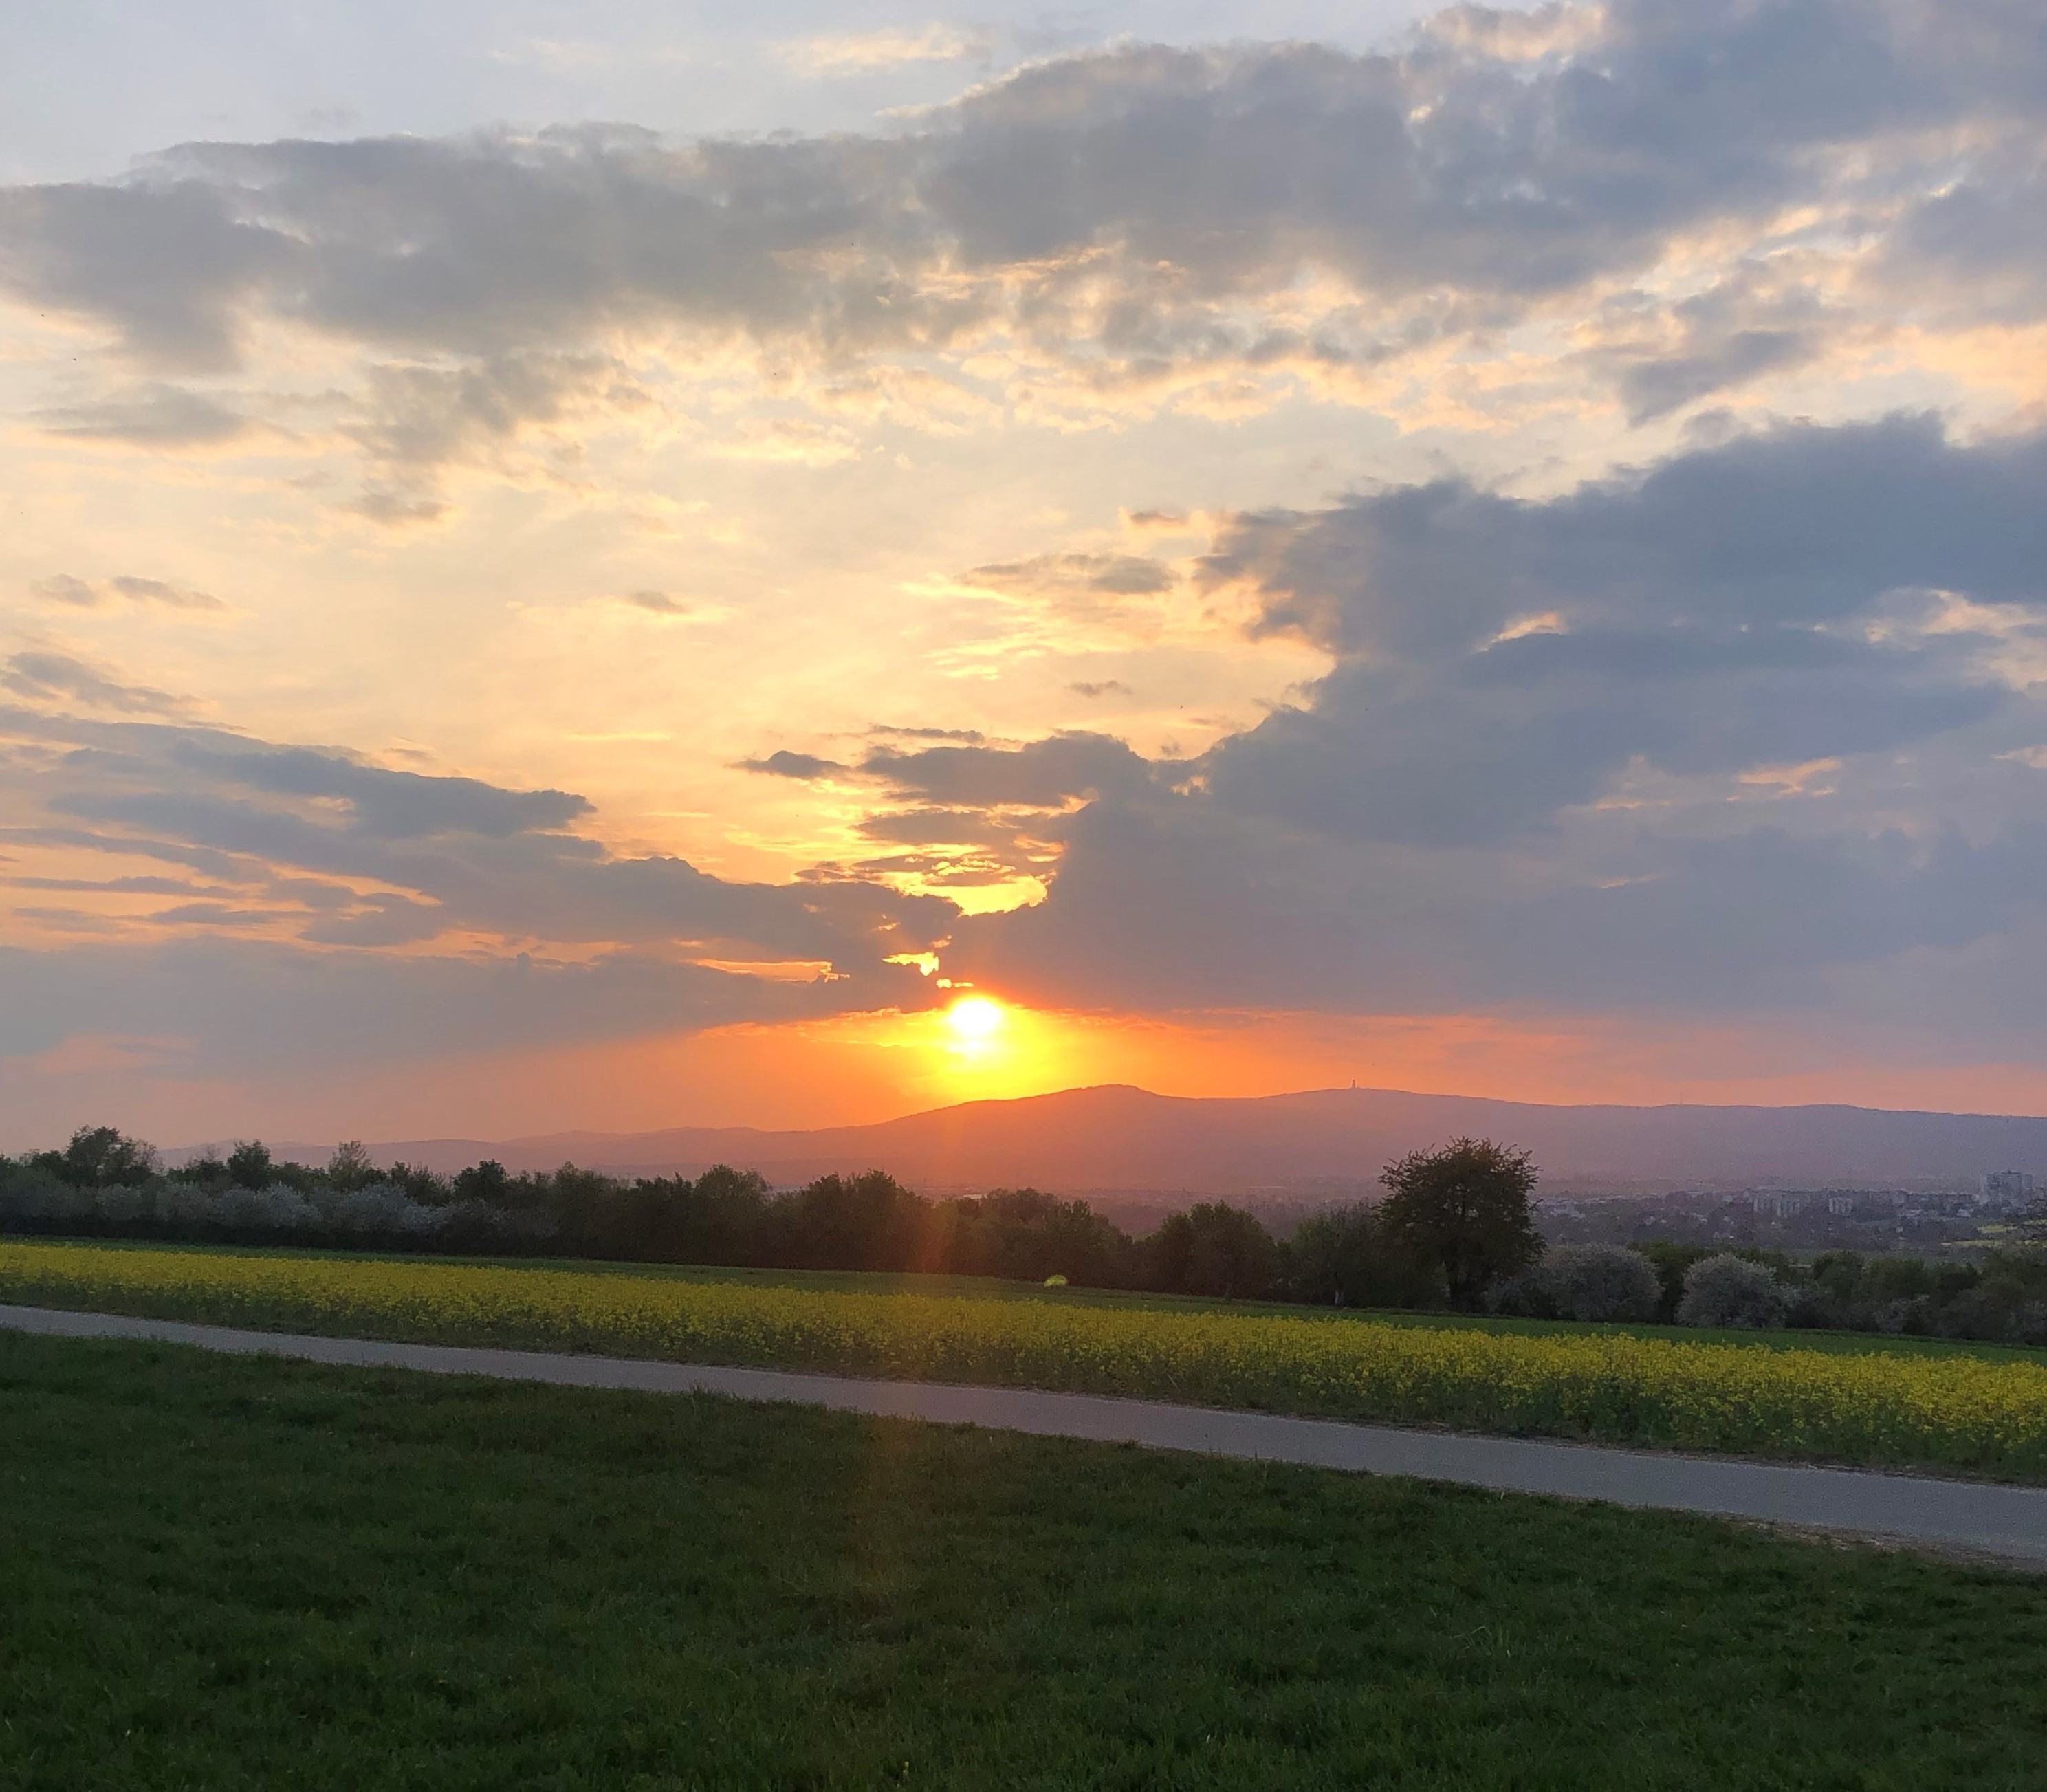 sunset on the fields